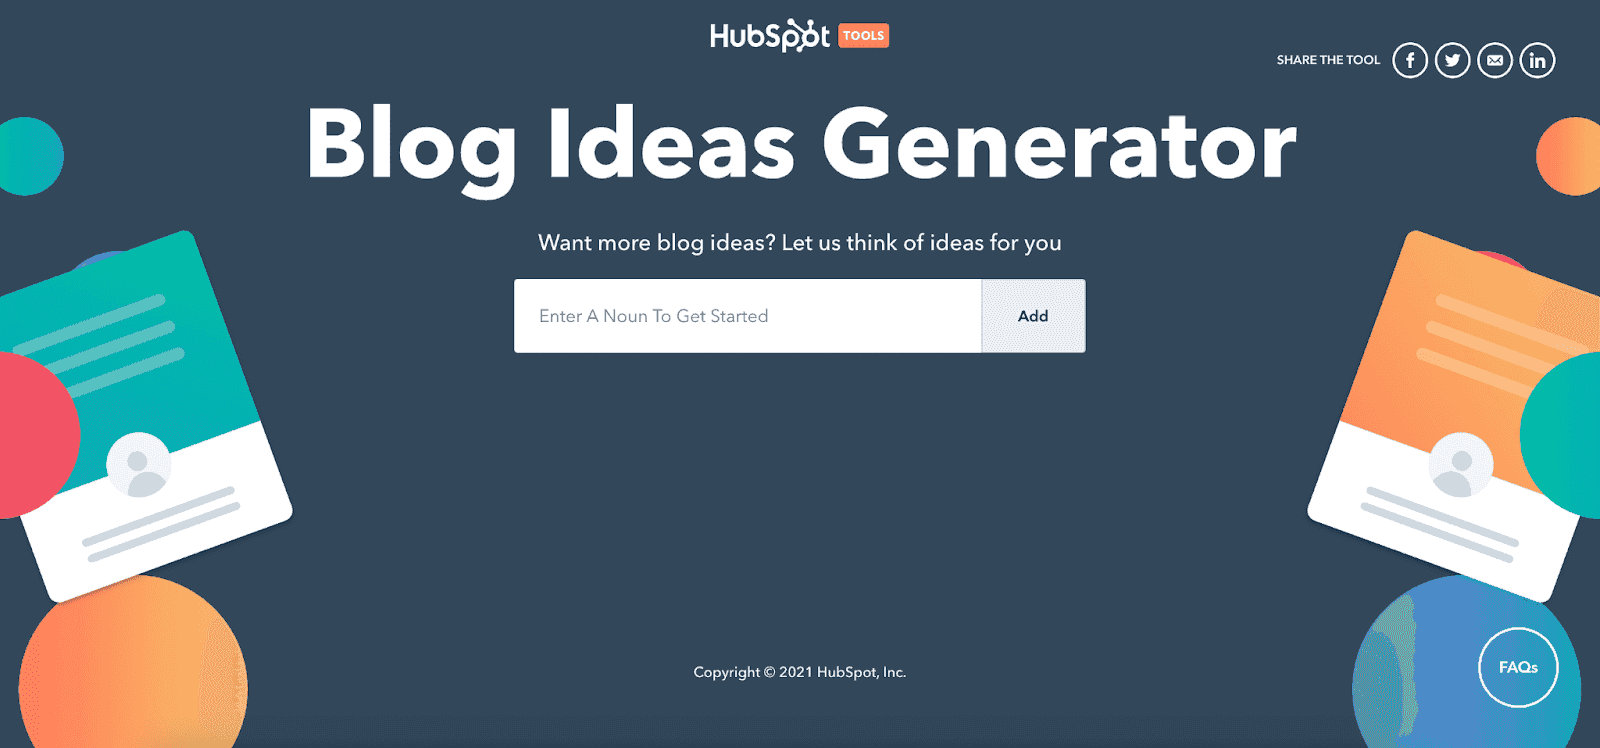 HubSpot blog idea generator tool